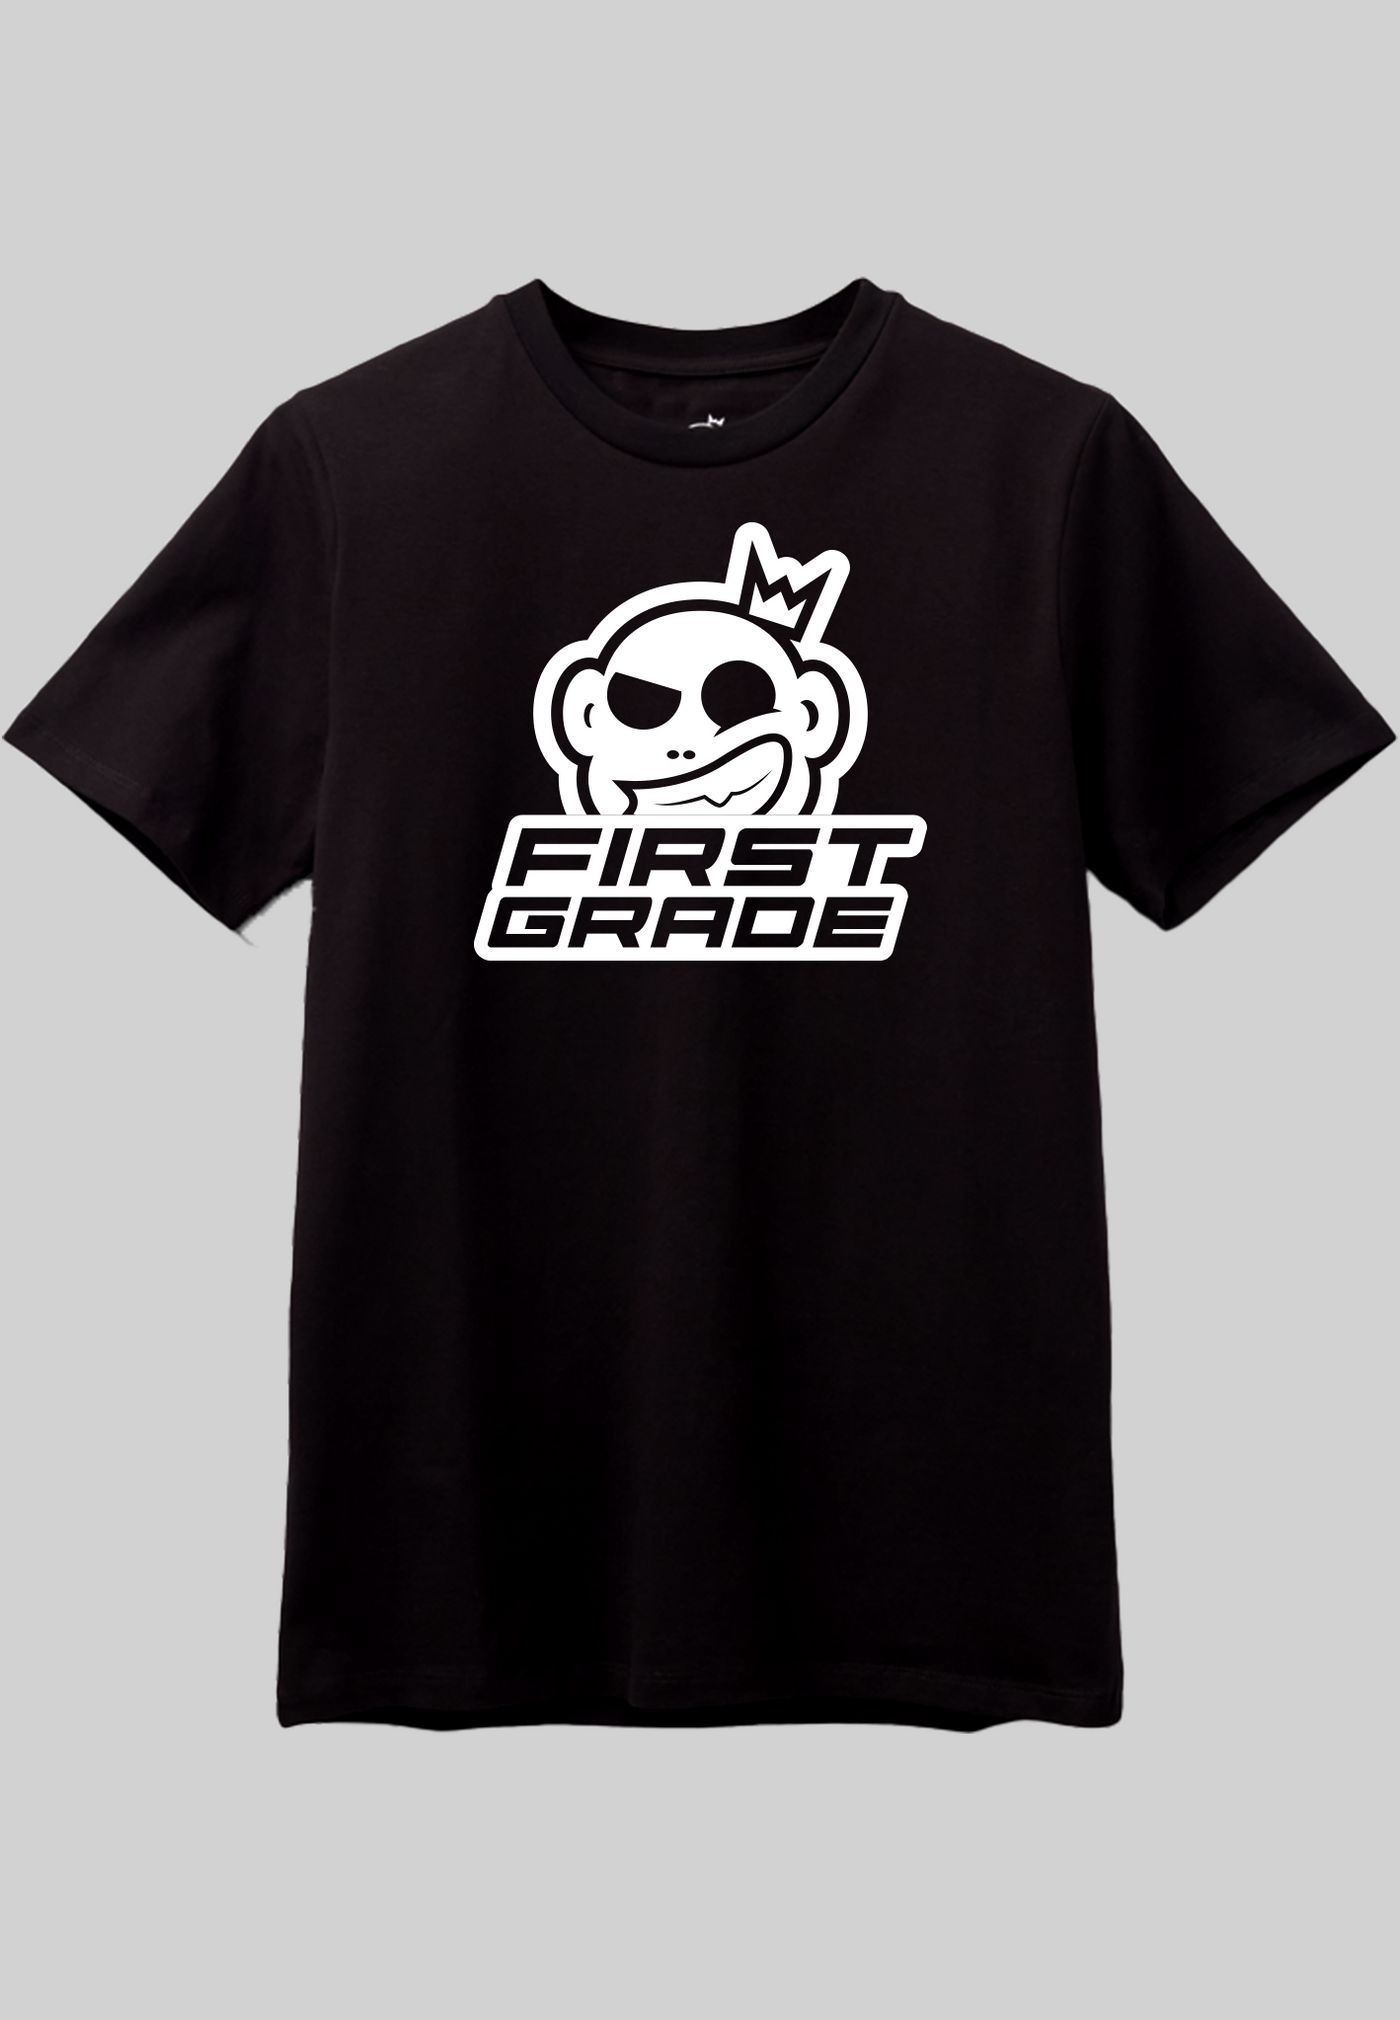 FirstGrade - CLUB - Black t-shirt